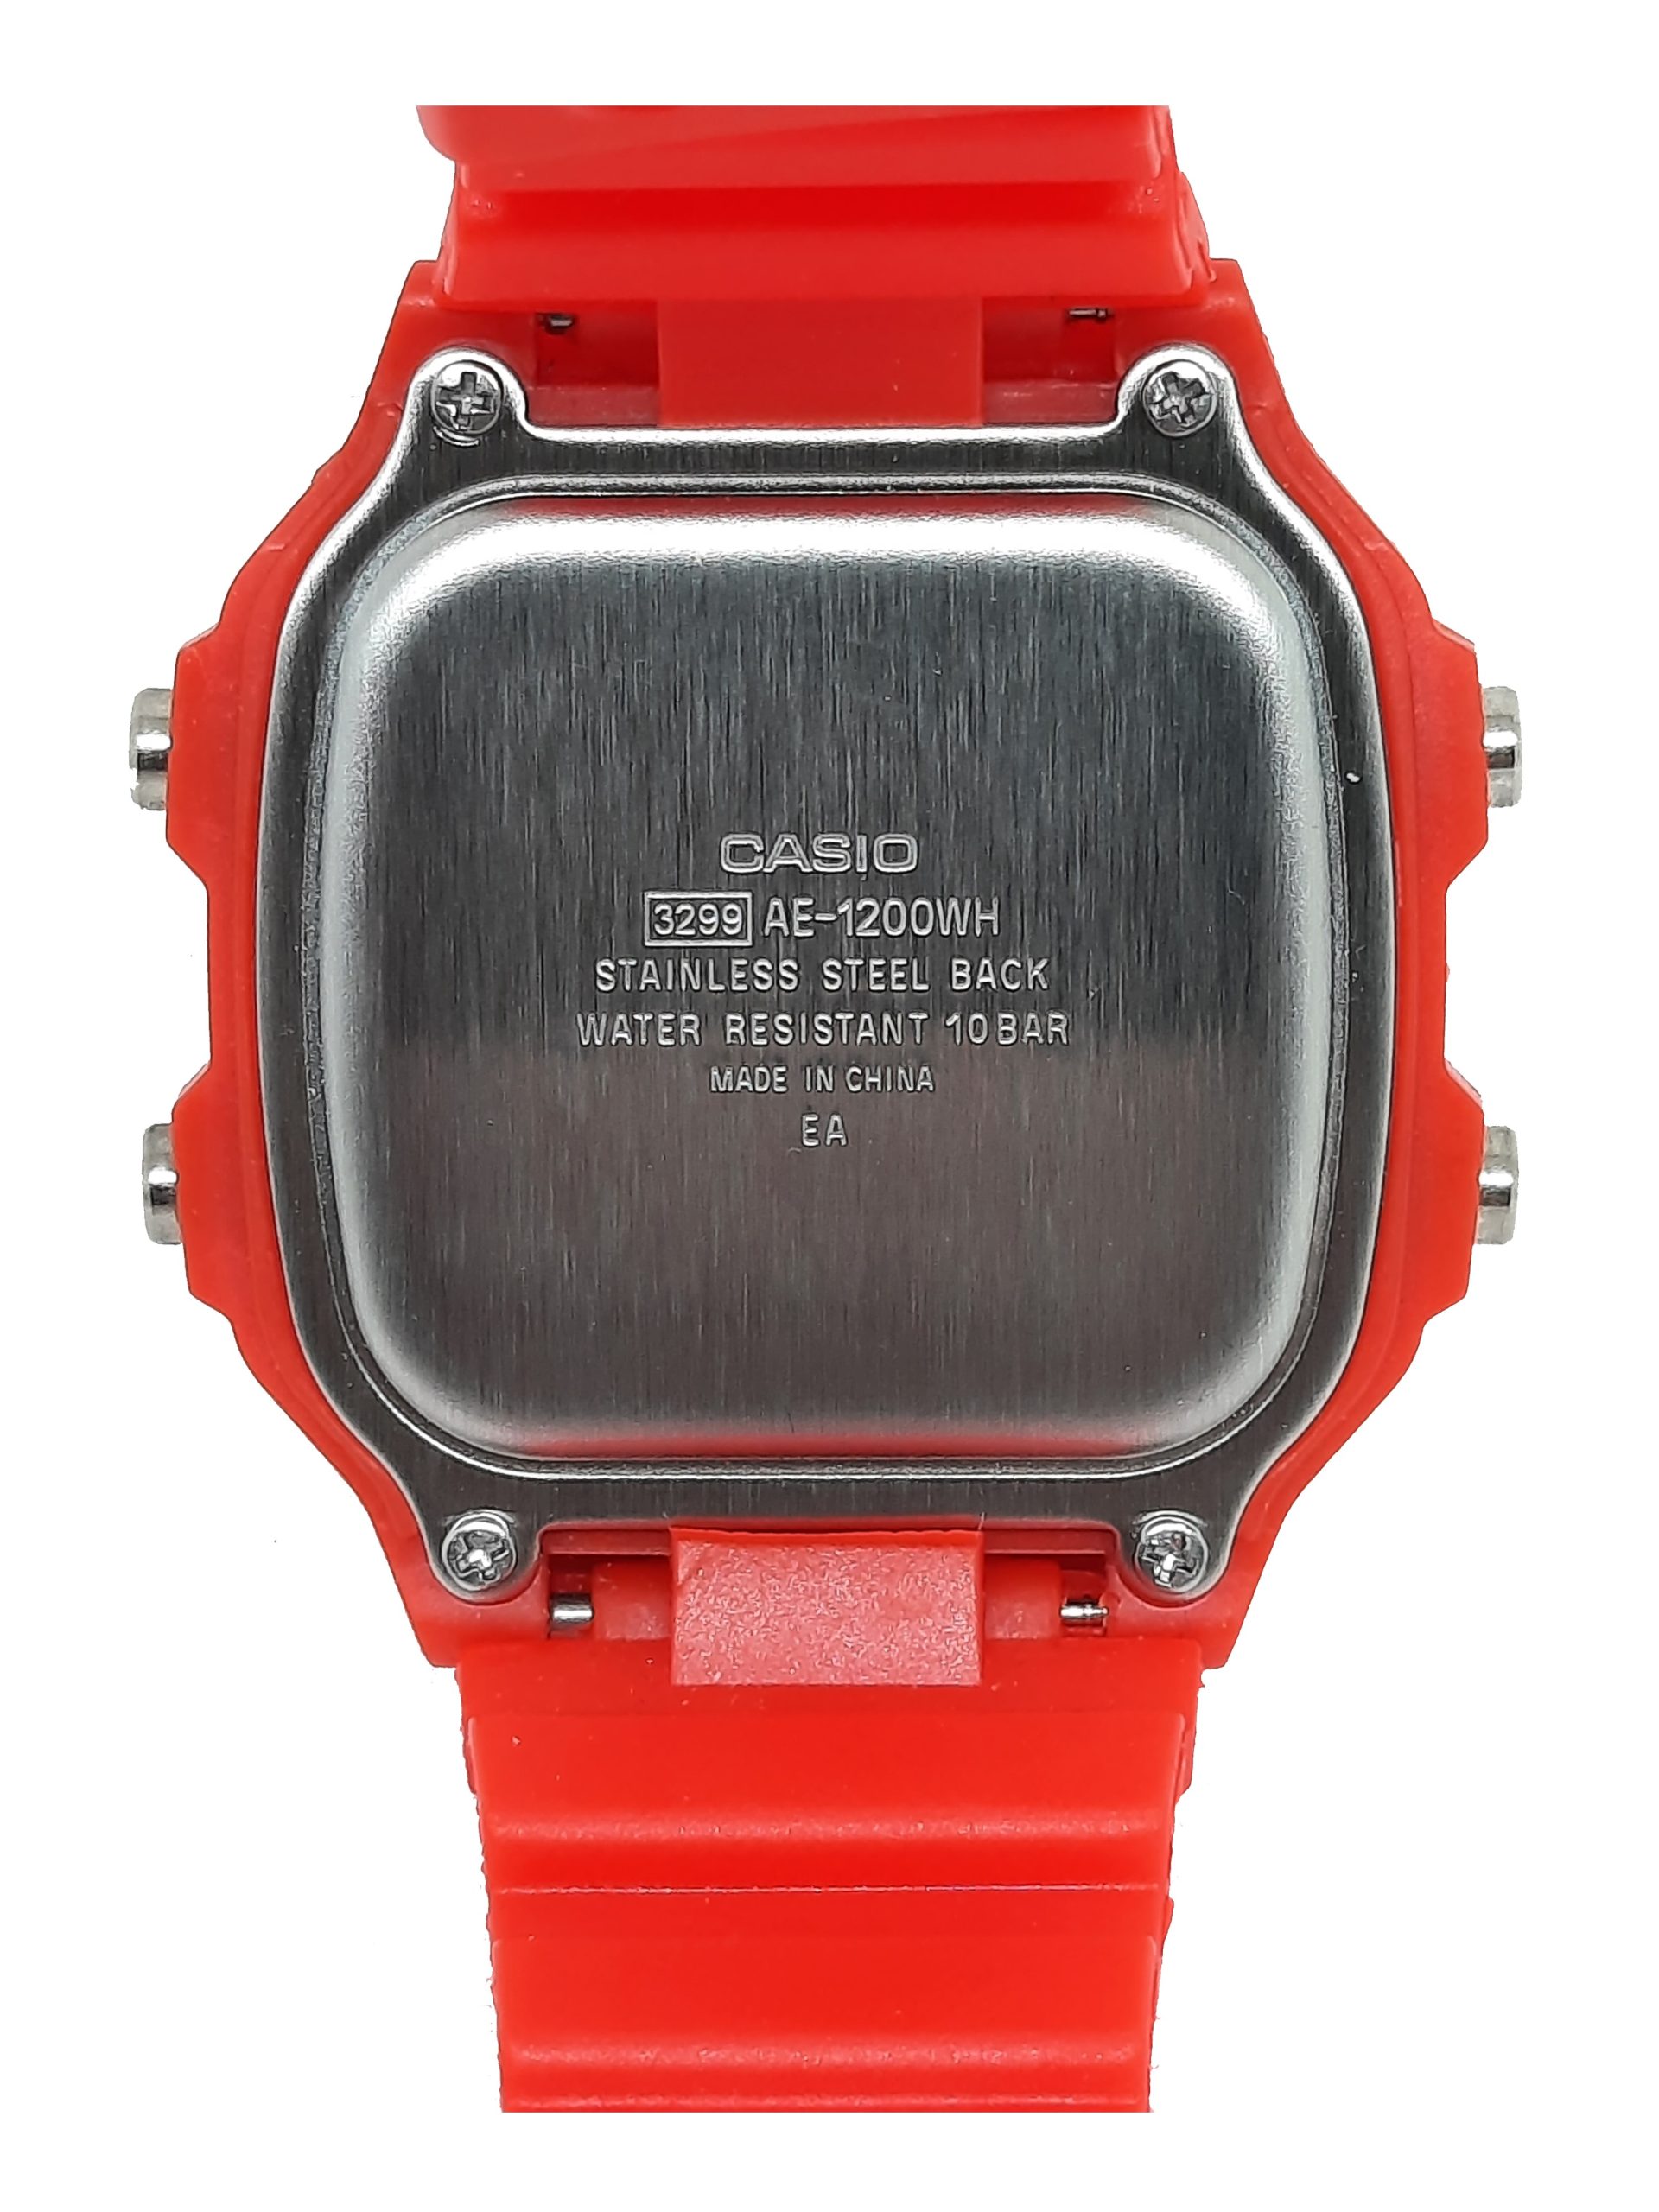 Casio_AE-1200WH_red_case_back